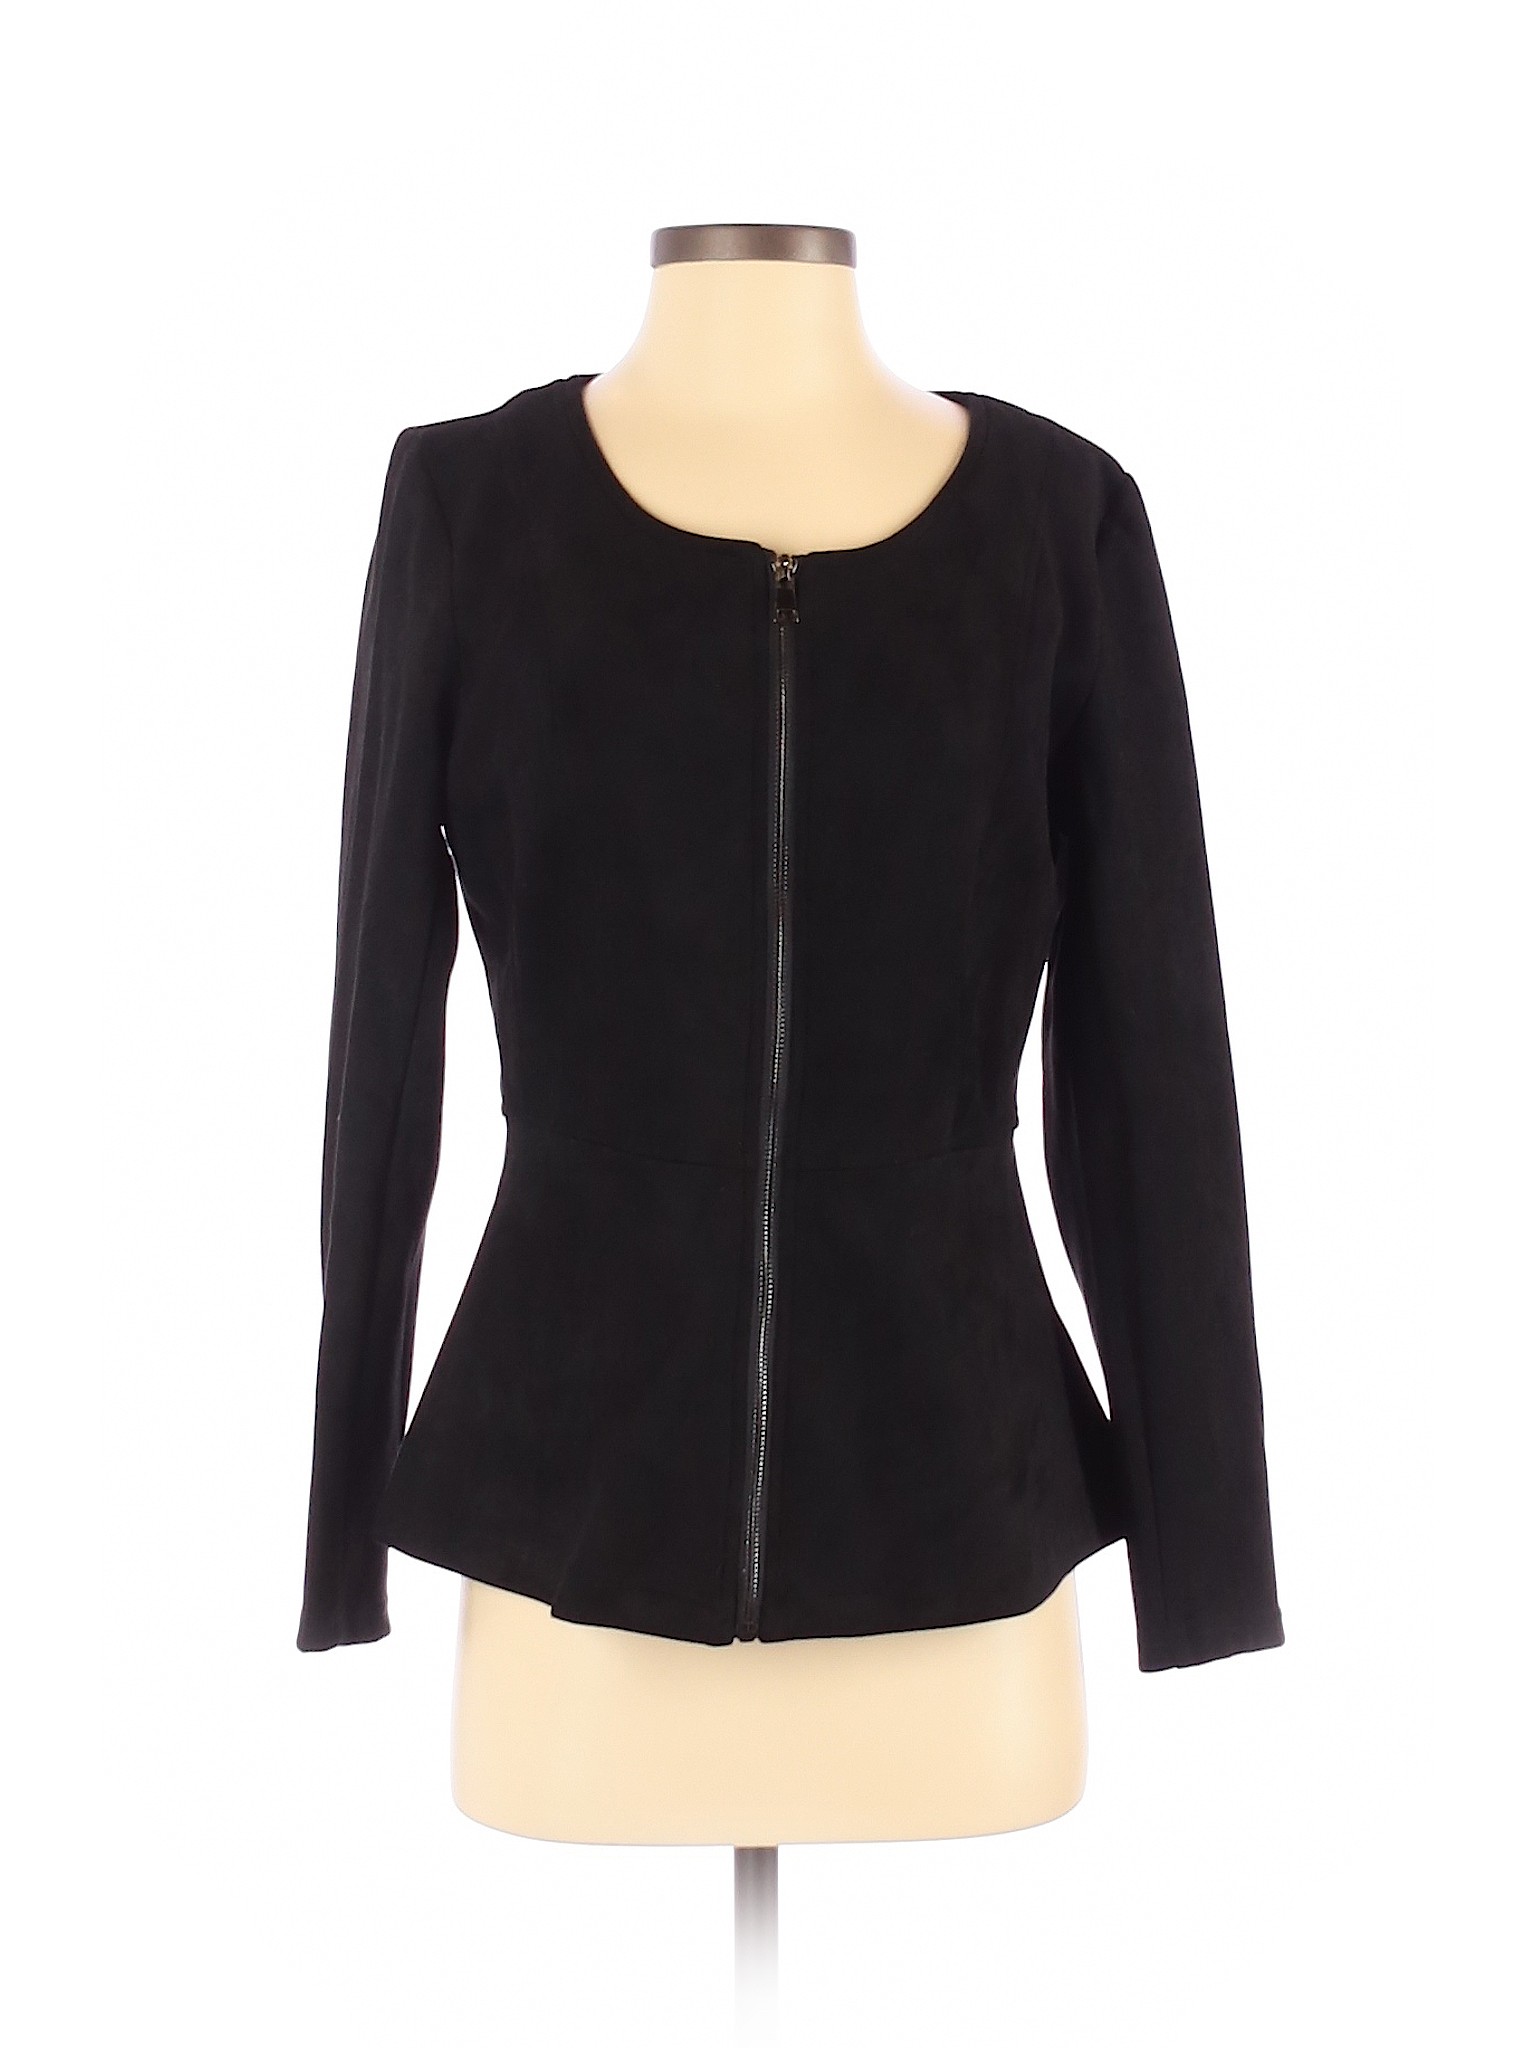 Solitaire Women Black Jacket S | eBay